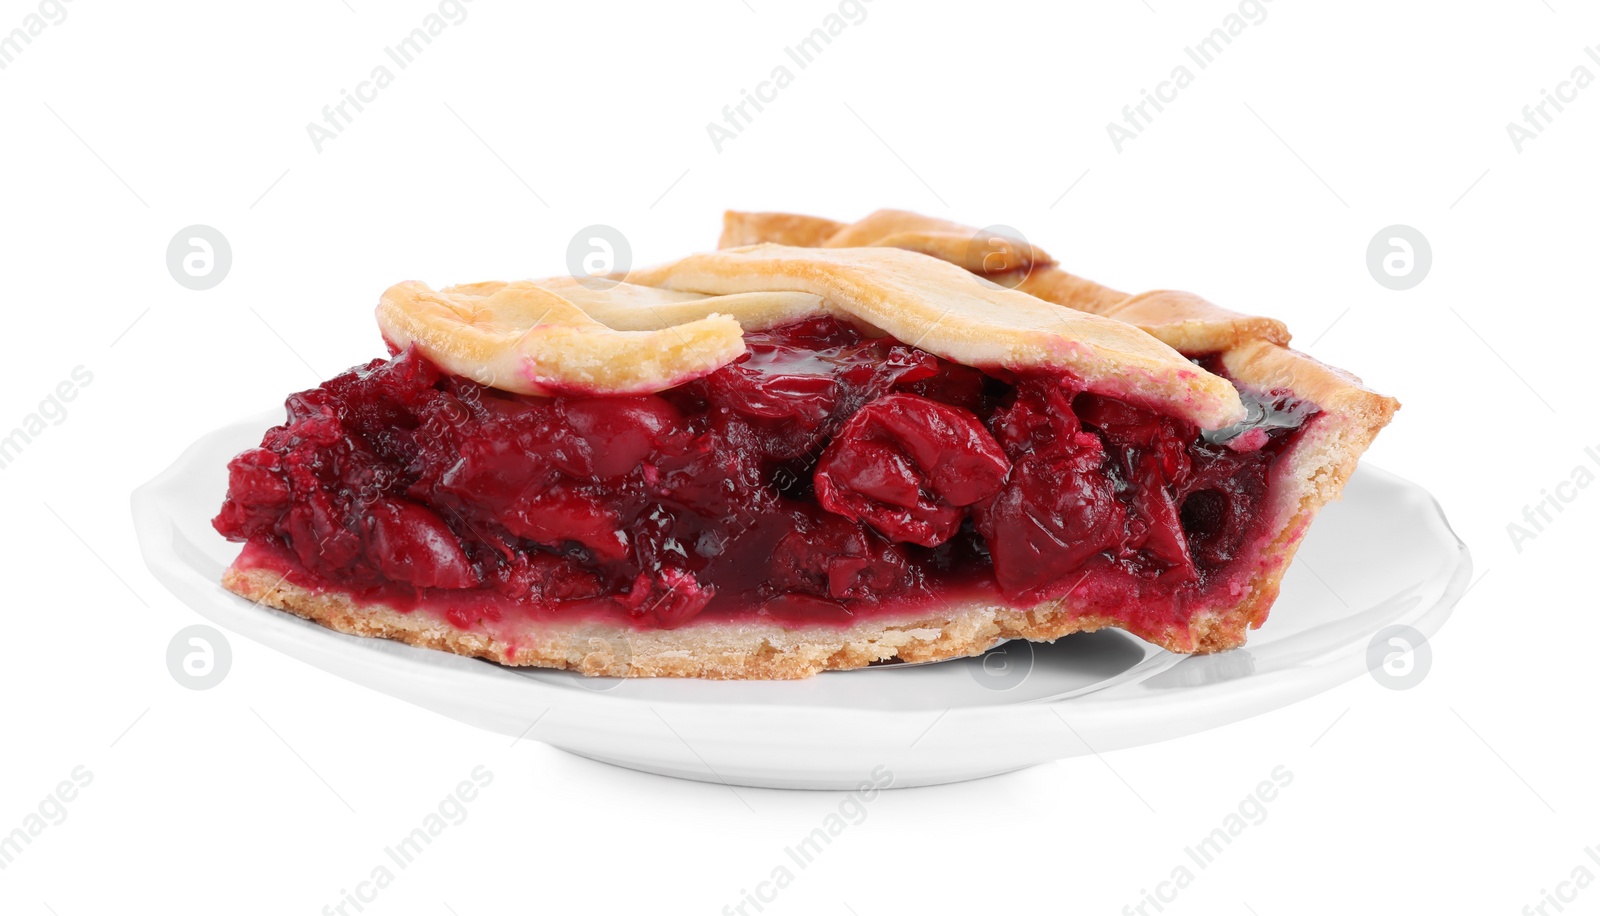 Photo of Slice of delicious fresh cherry pie isolated on white